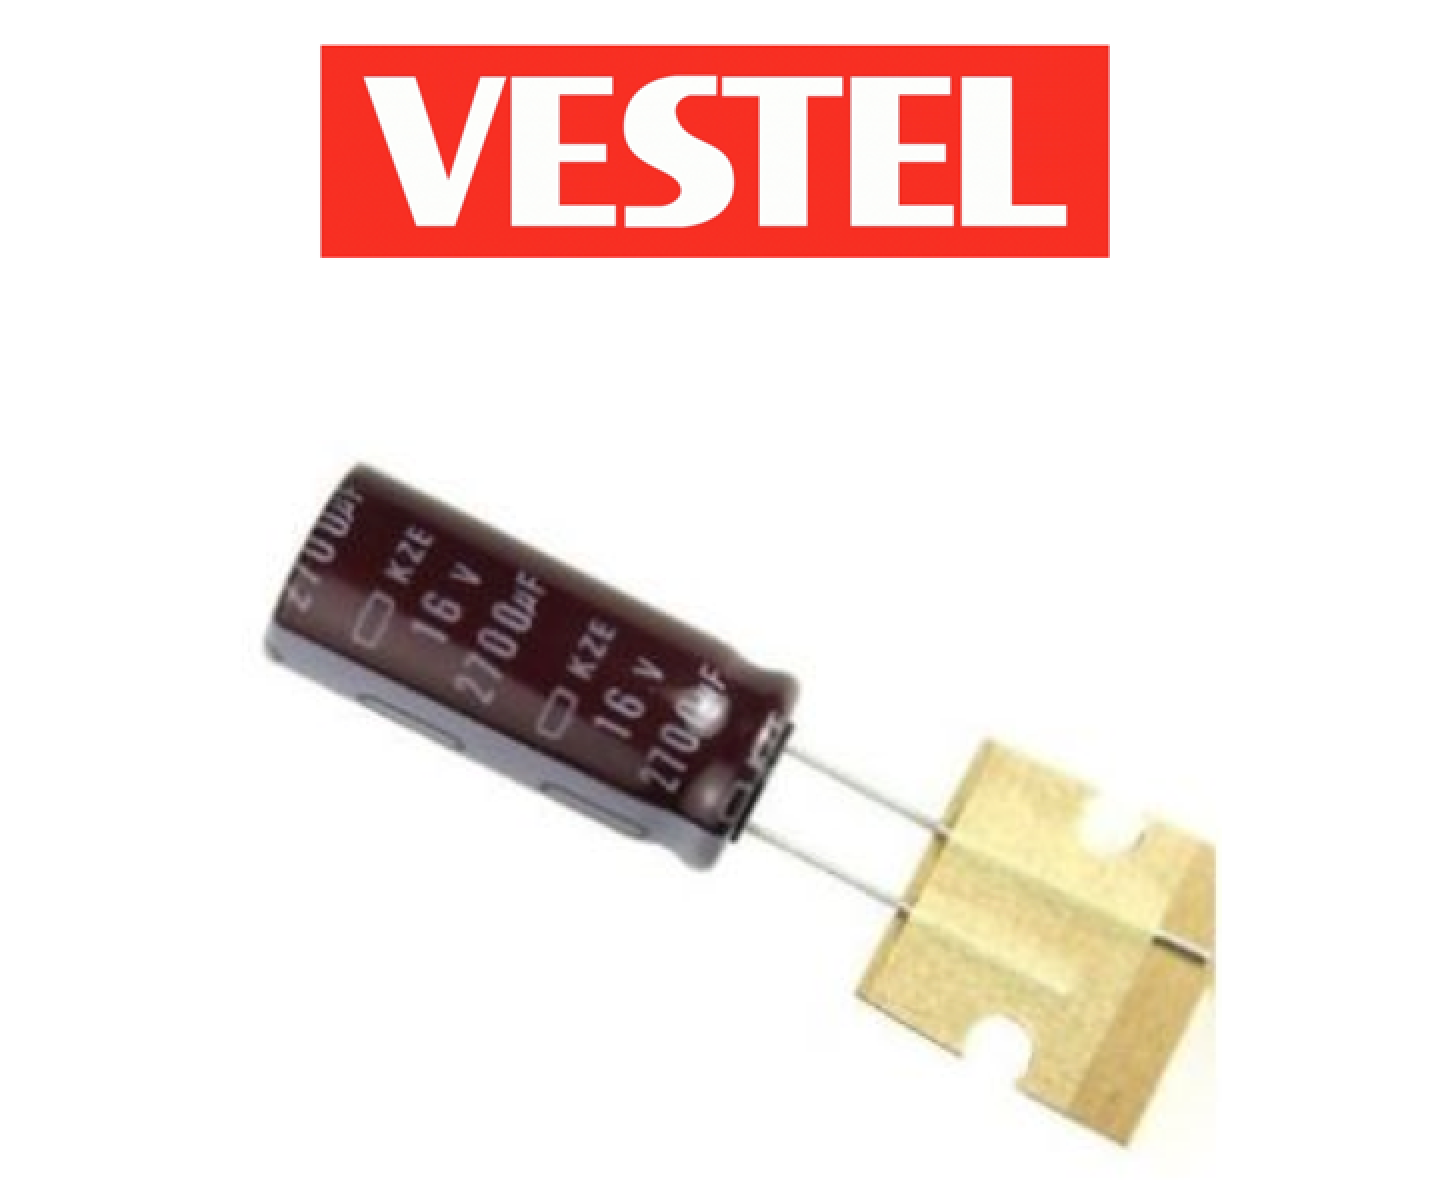 Vestel 2700uf 16v 105°c Electrolytic Capacitor 30062016 13 x 20mm